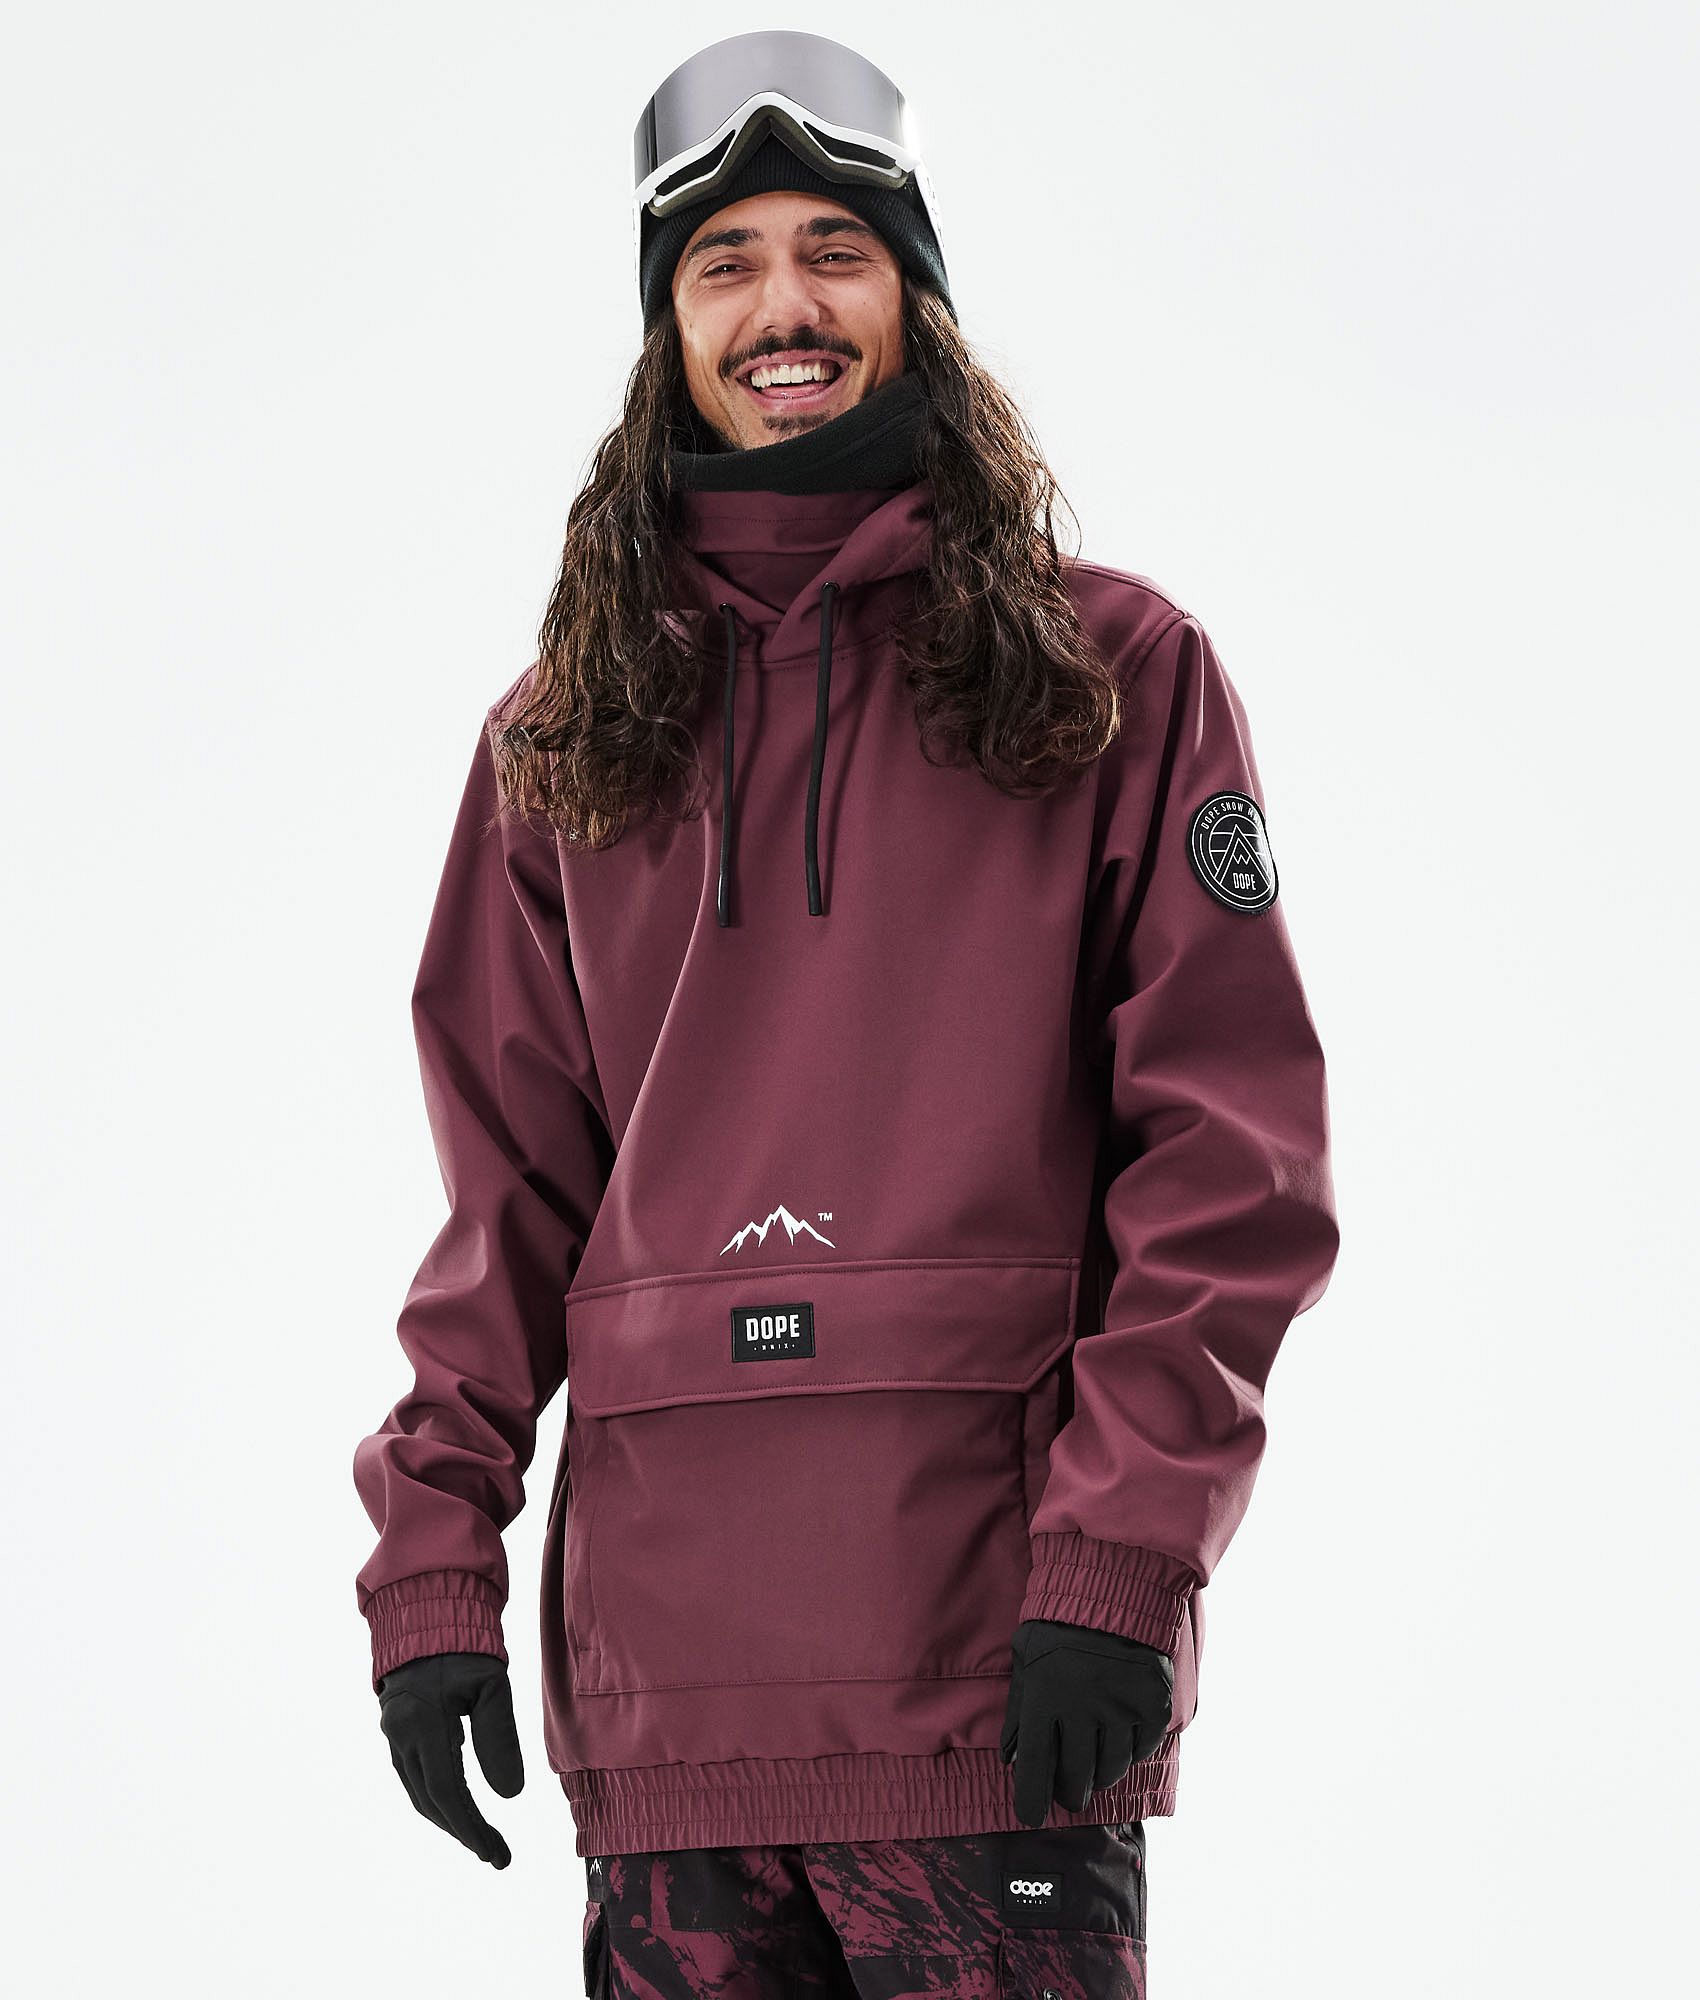 Mens Ski Jacket SnowboardD101 Red Snow Winter Waterproof Breathable S M L XL XXL 